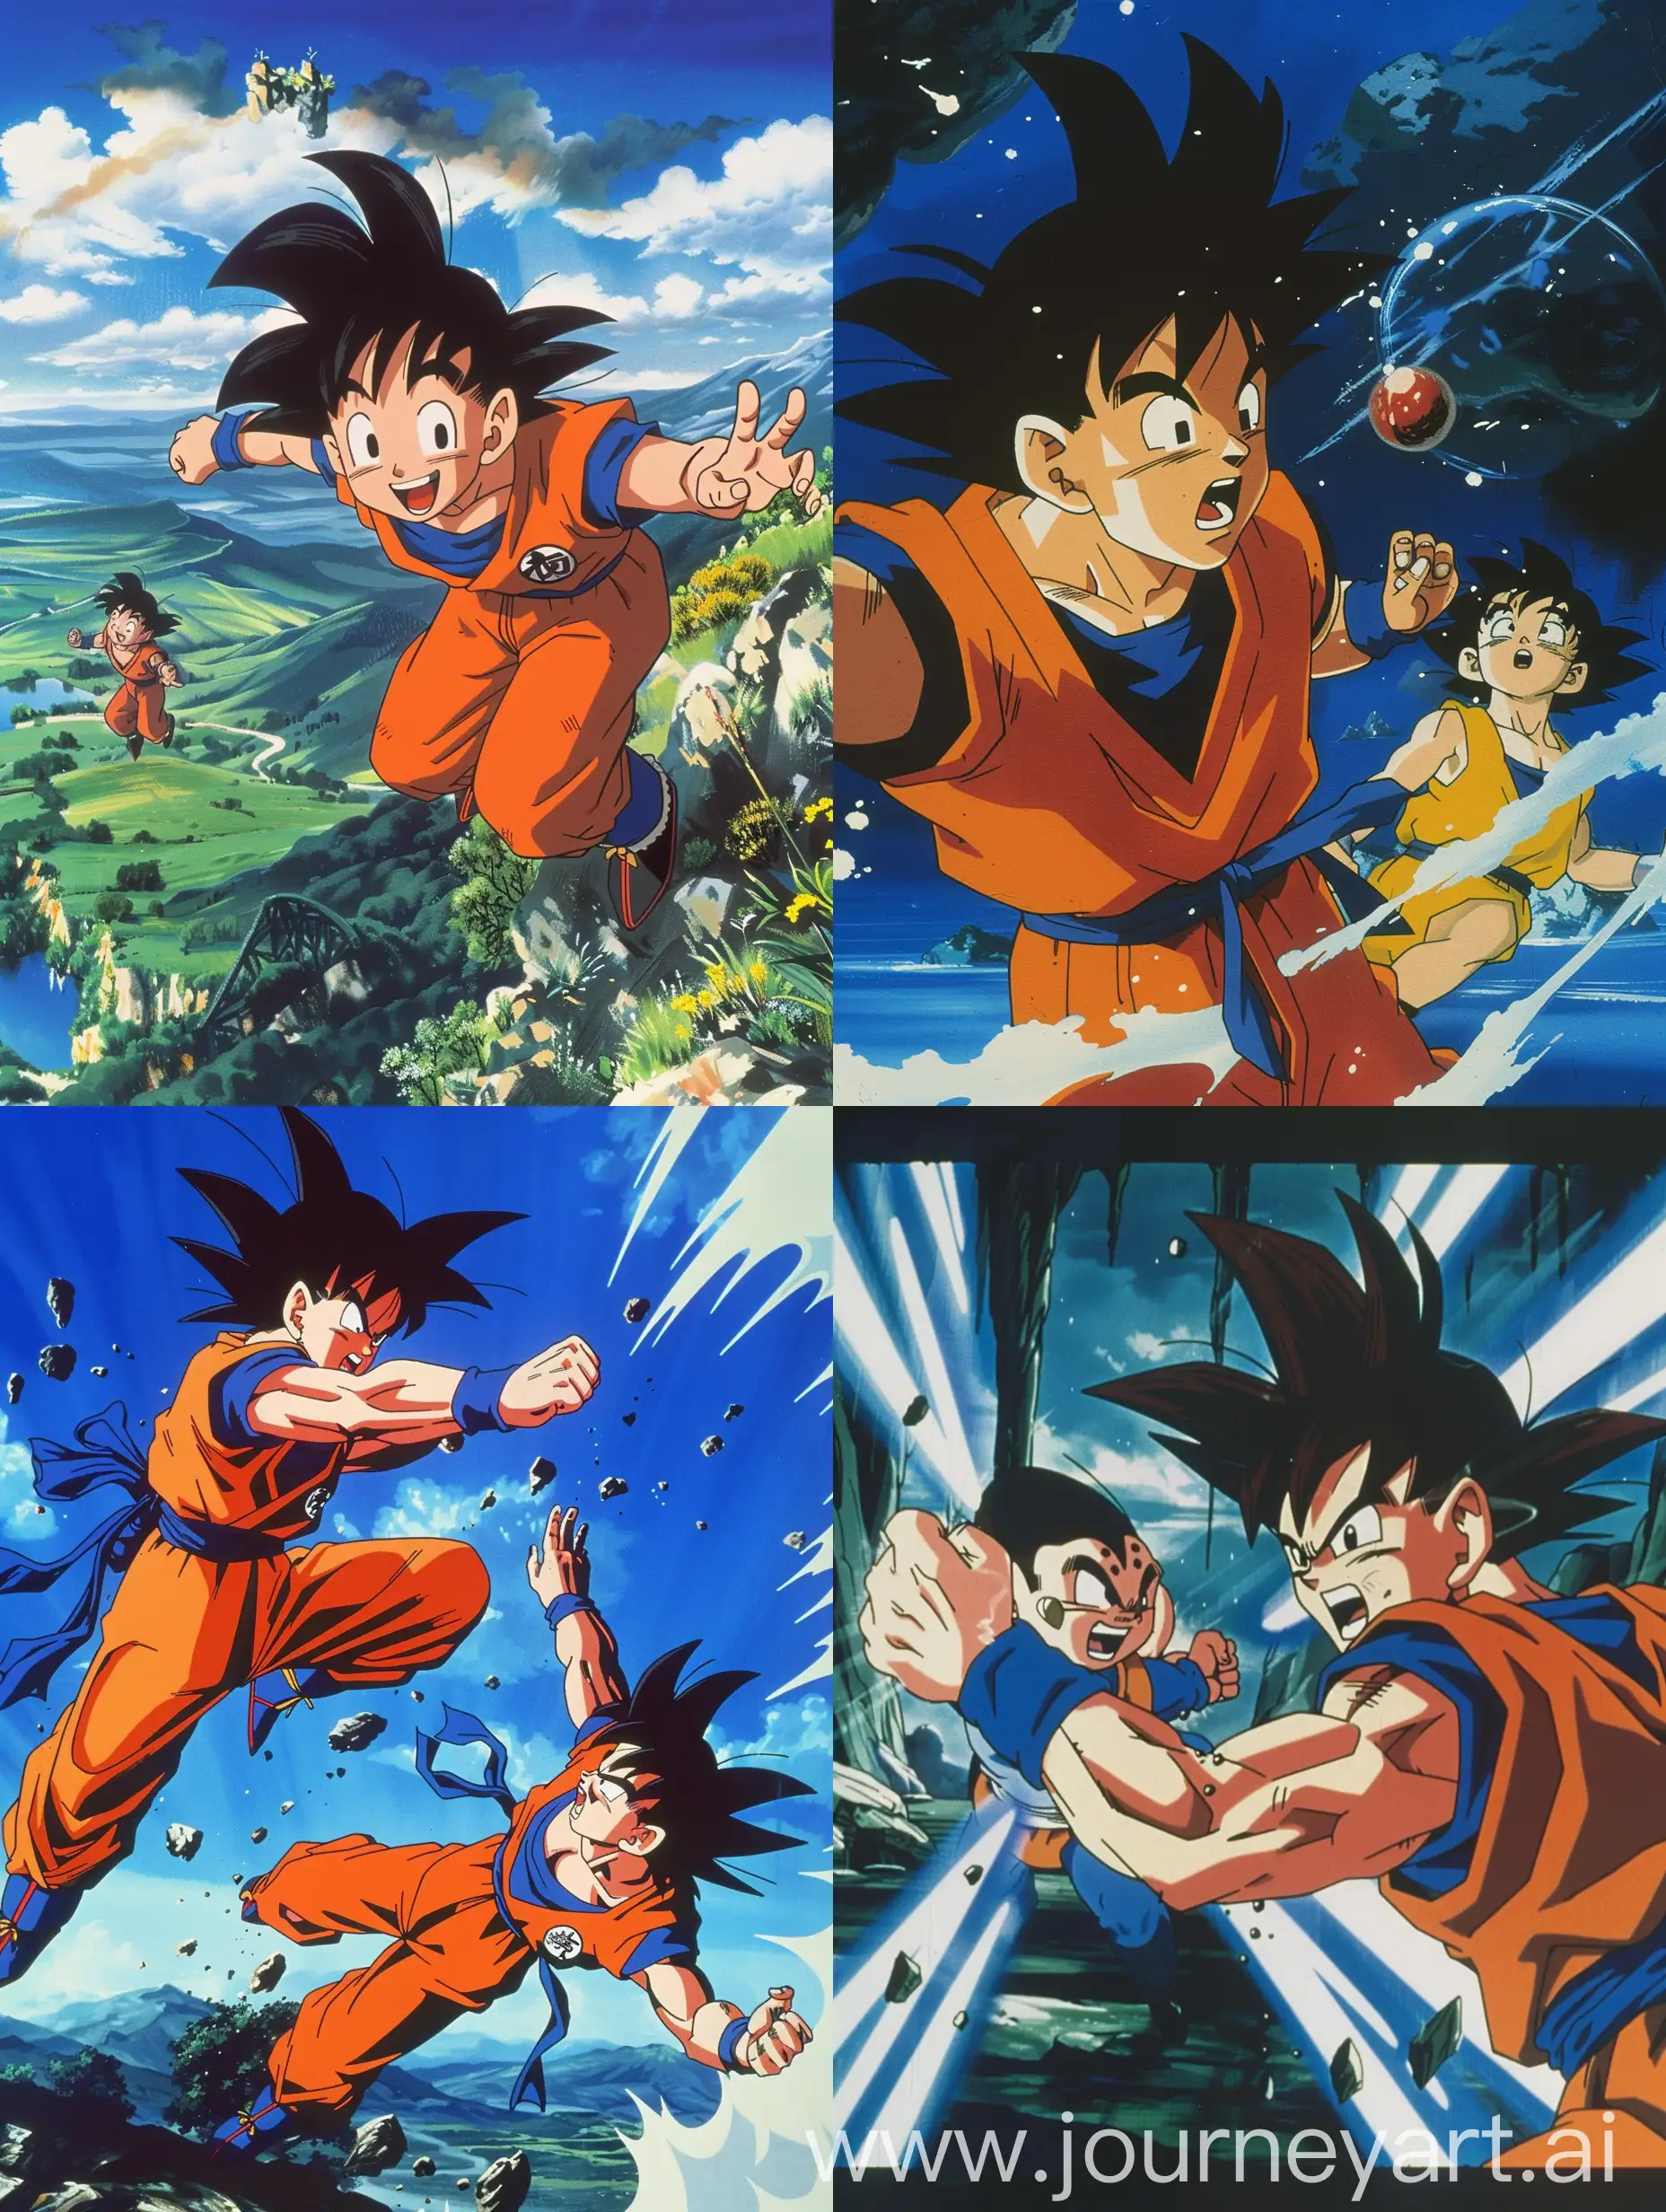 Goku vs narotu 1991 anime film style